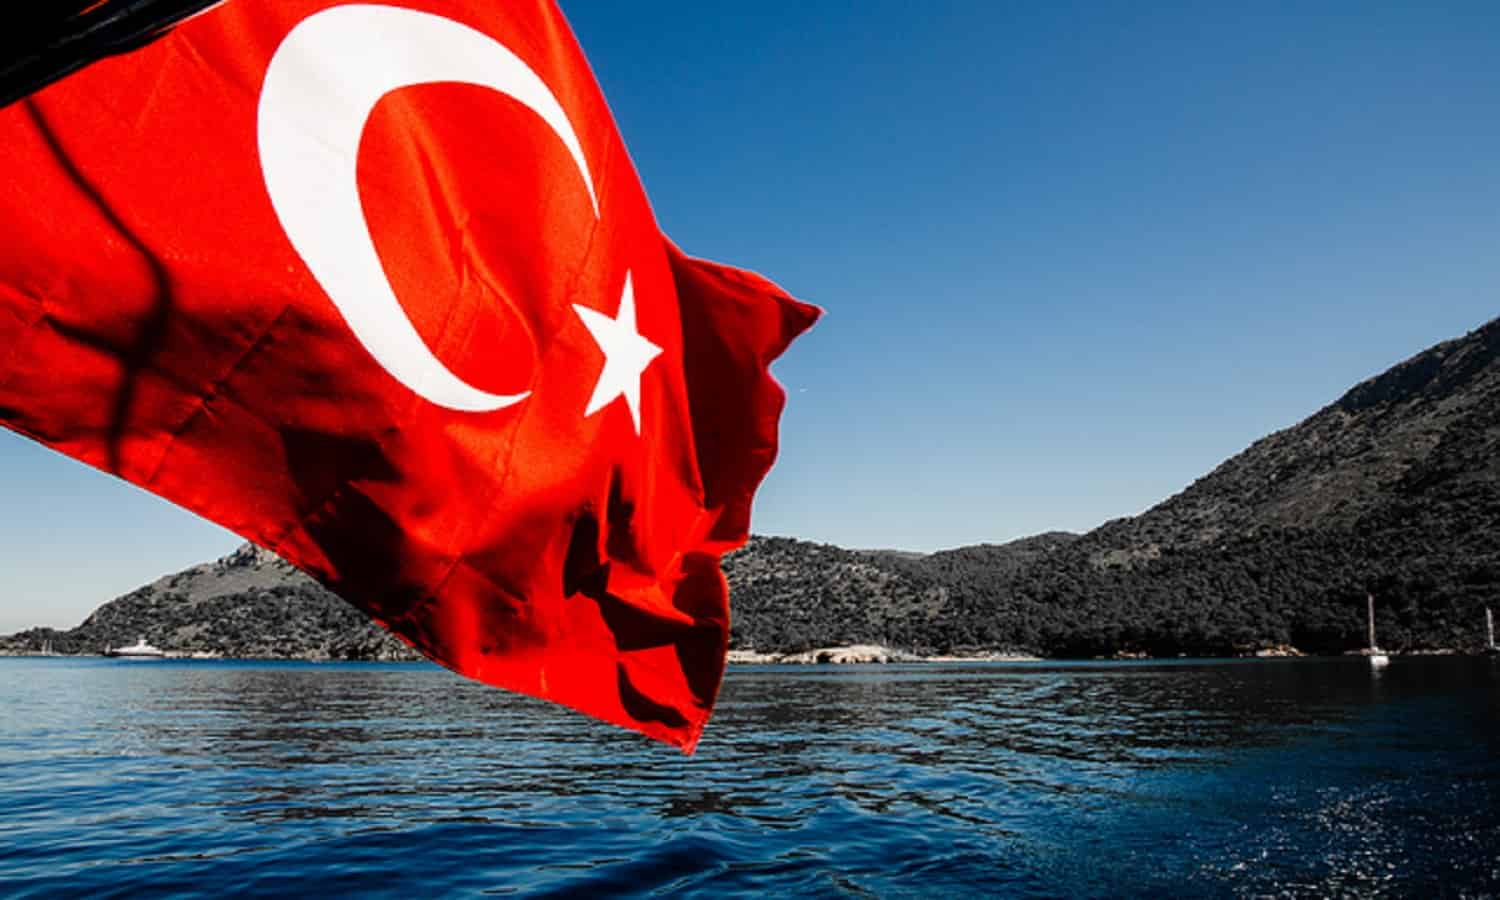 Турция 4 октября. Турция ь флаг. Турецкий флаг Стамбул. Аланья турецкий флаг. Флаг тунеции.